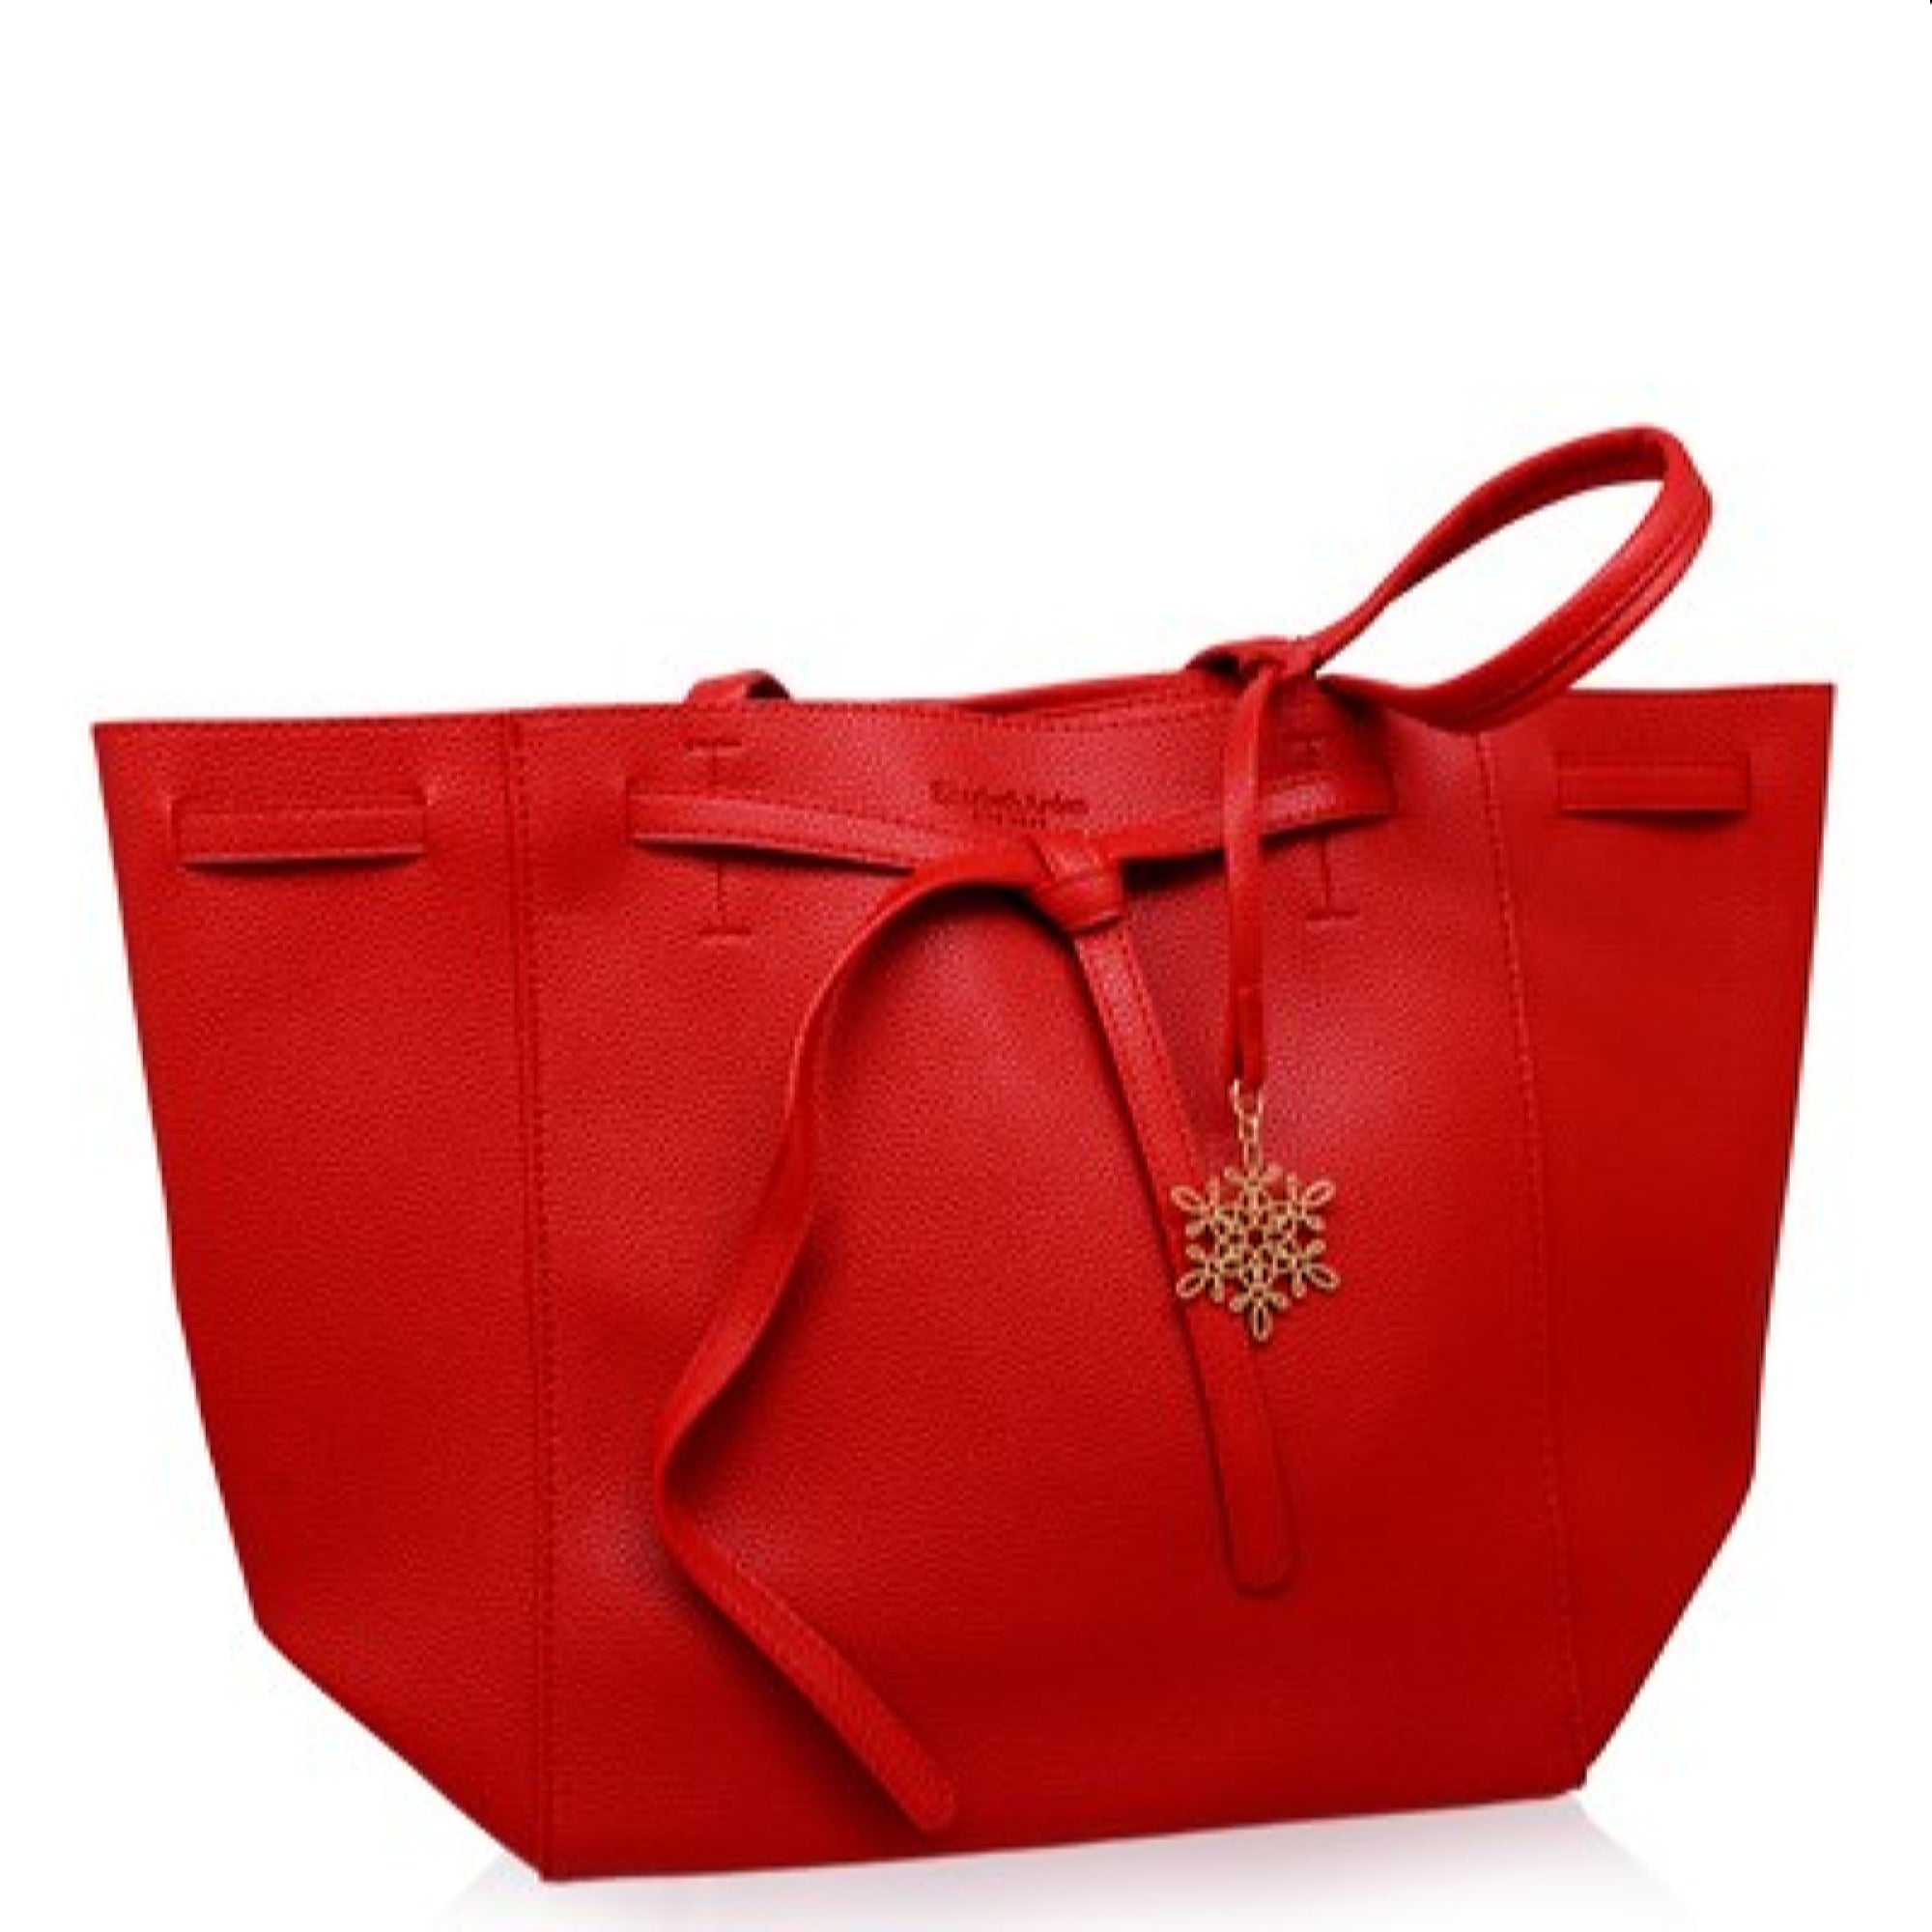 Red Tote Bag Purse W Tag And Golden Toned Ornament A01 - Bezali